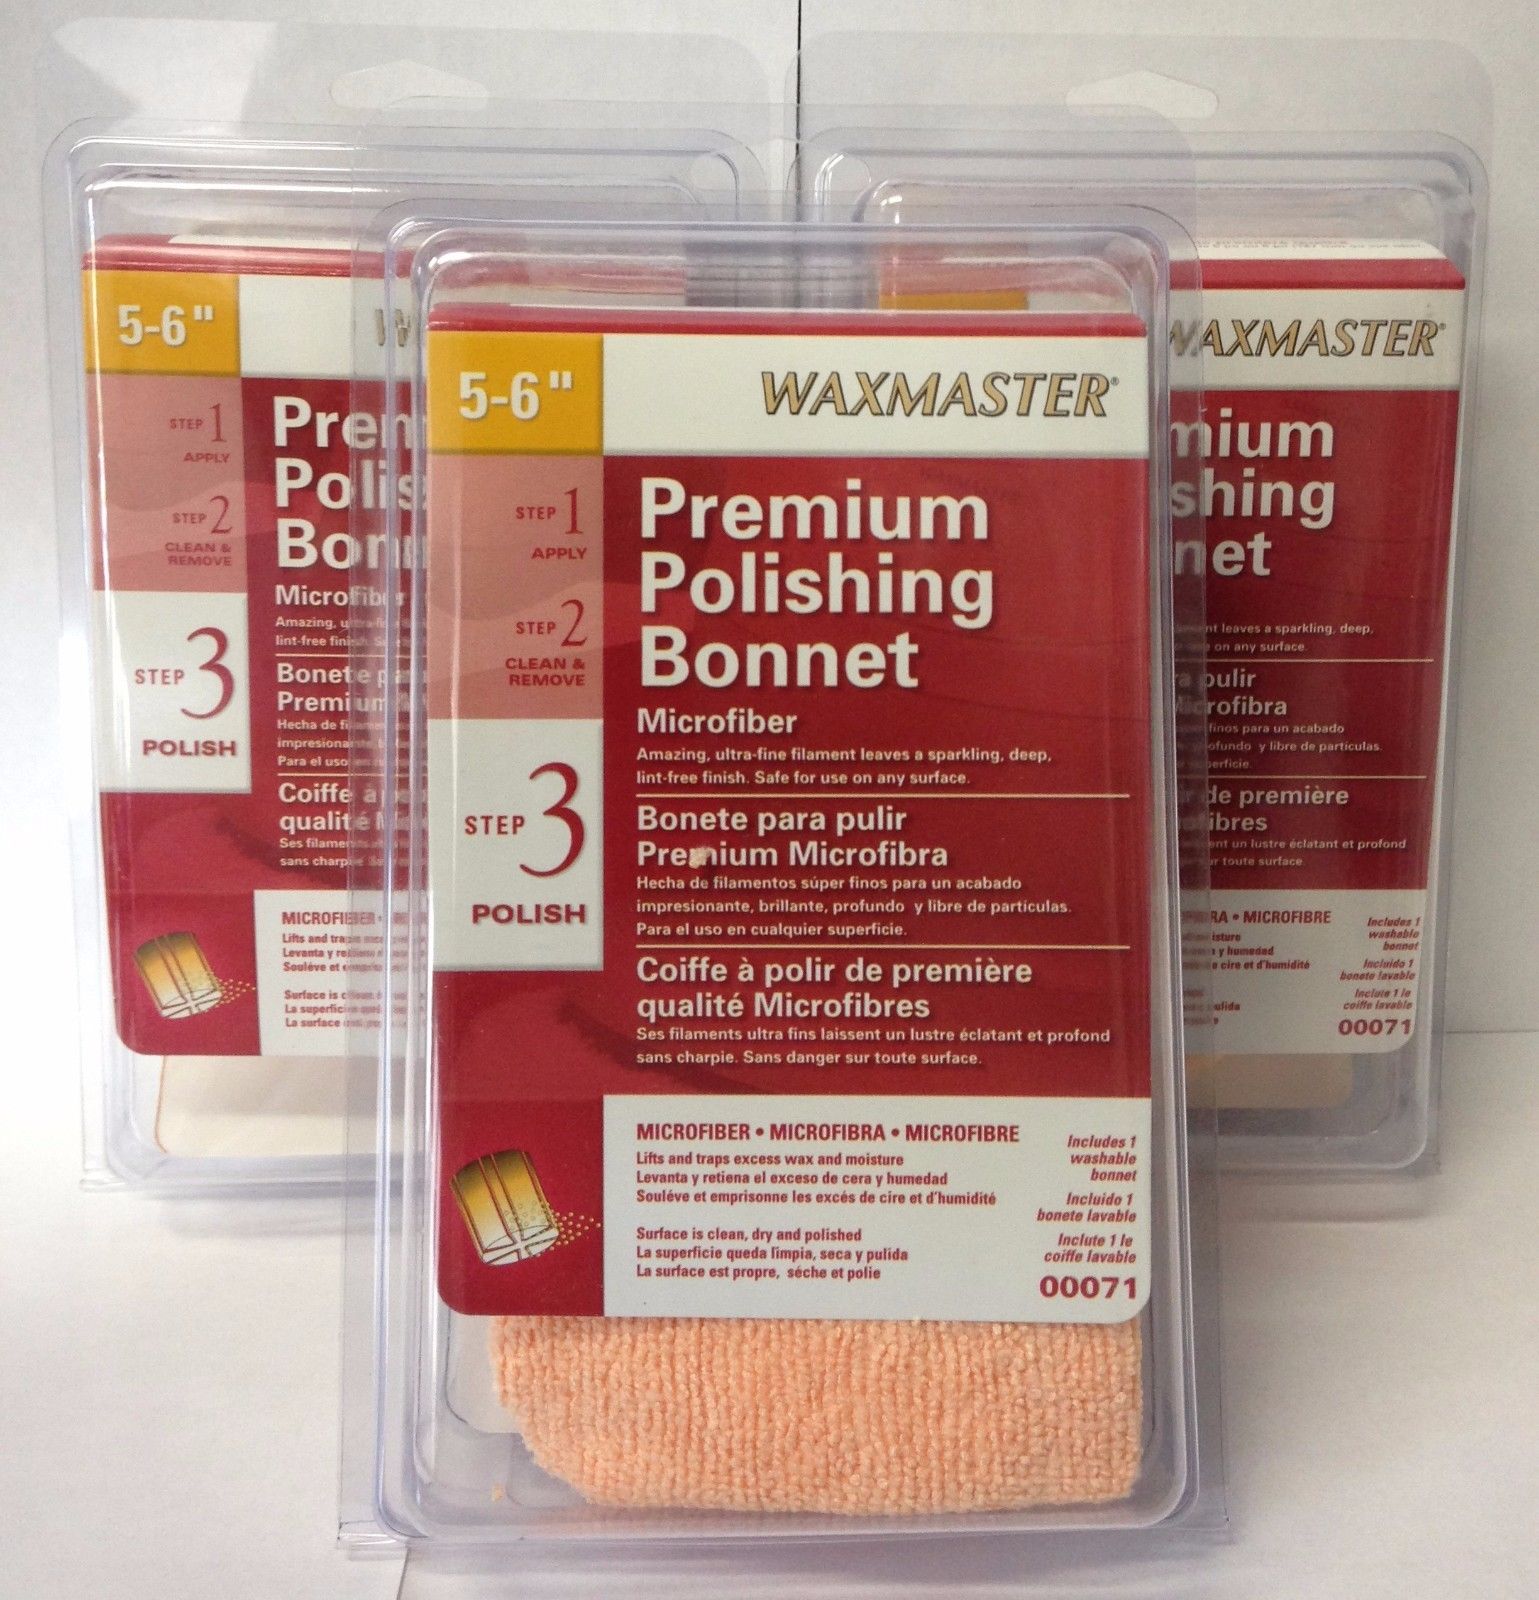 Waxmaster 00071 5-6" Microfiber Premium Polishing Bonnet 3PKS